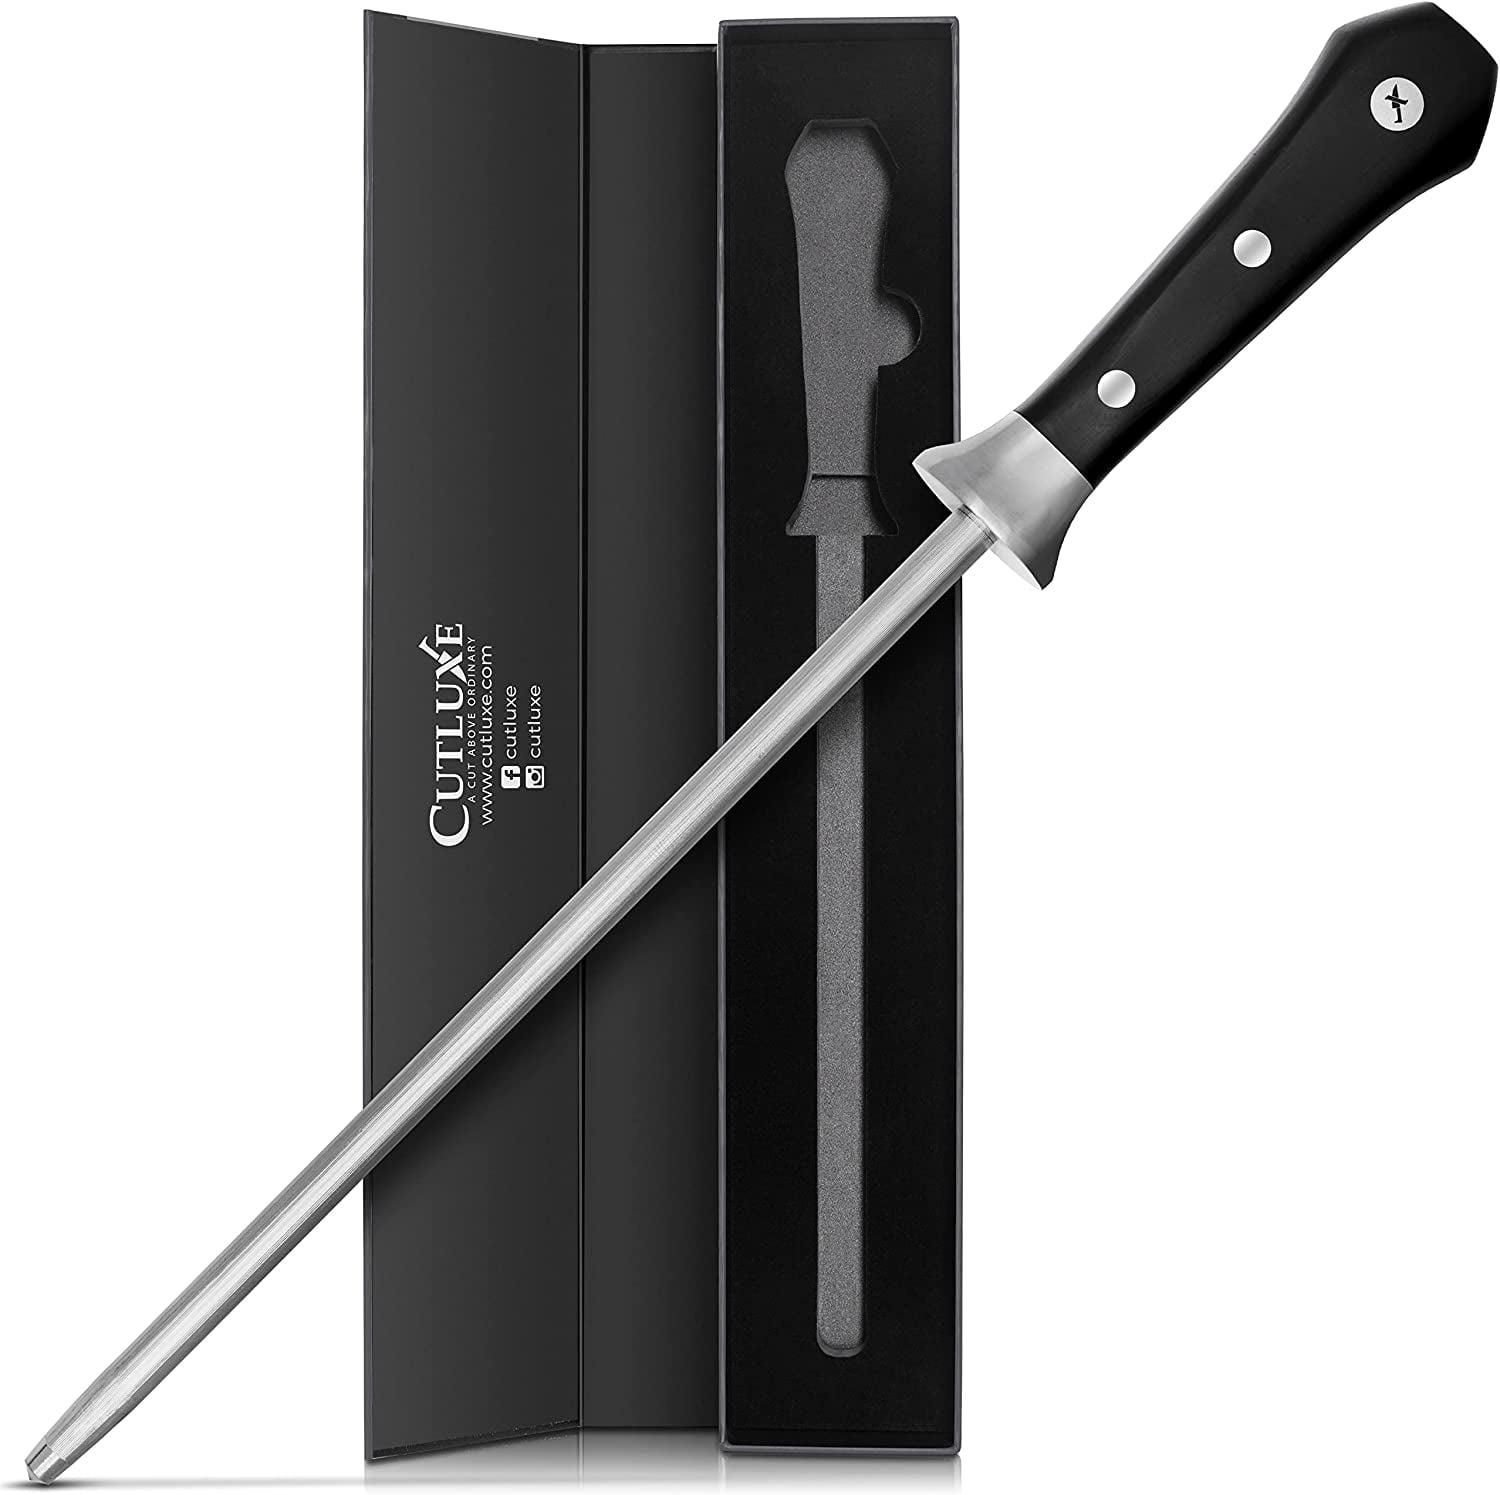 Kitchen Cutter Cutlery Edge Sharpening Steel Honing Rod Bar - Black,Silver - 12.6 x 1.5 x 0.87(L*W*T)